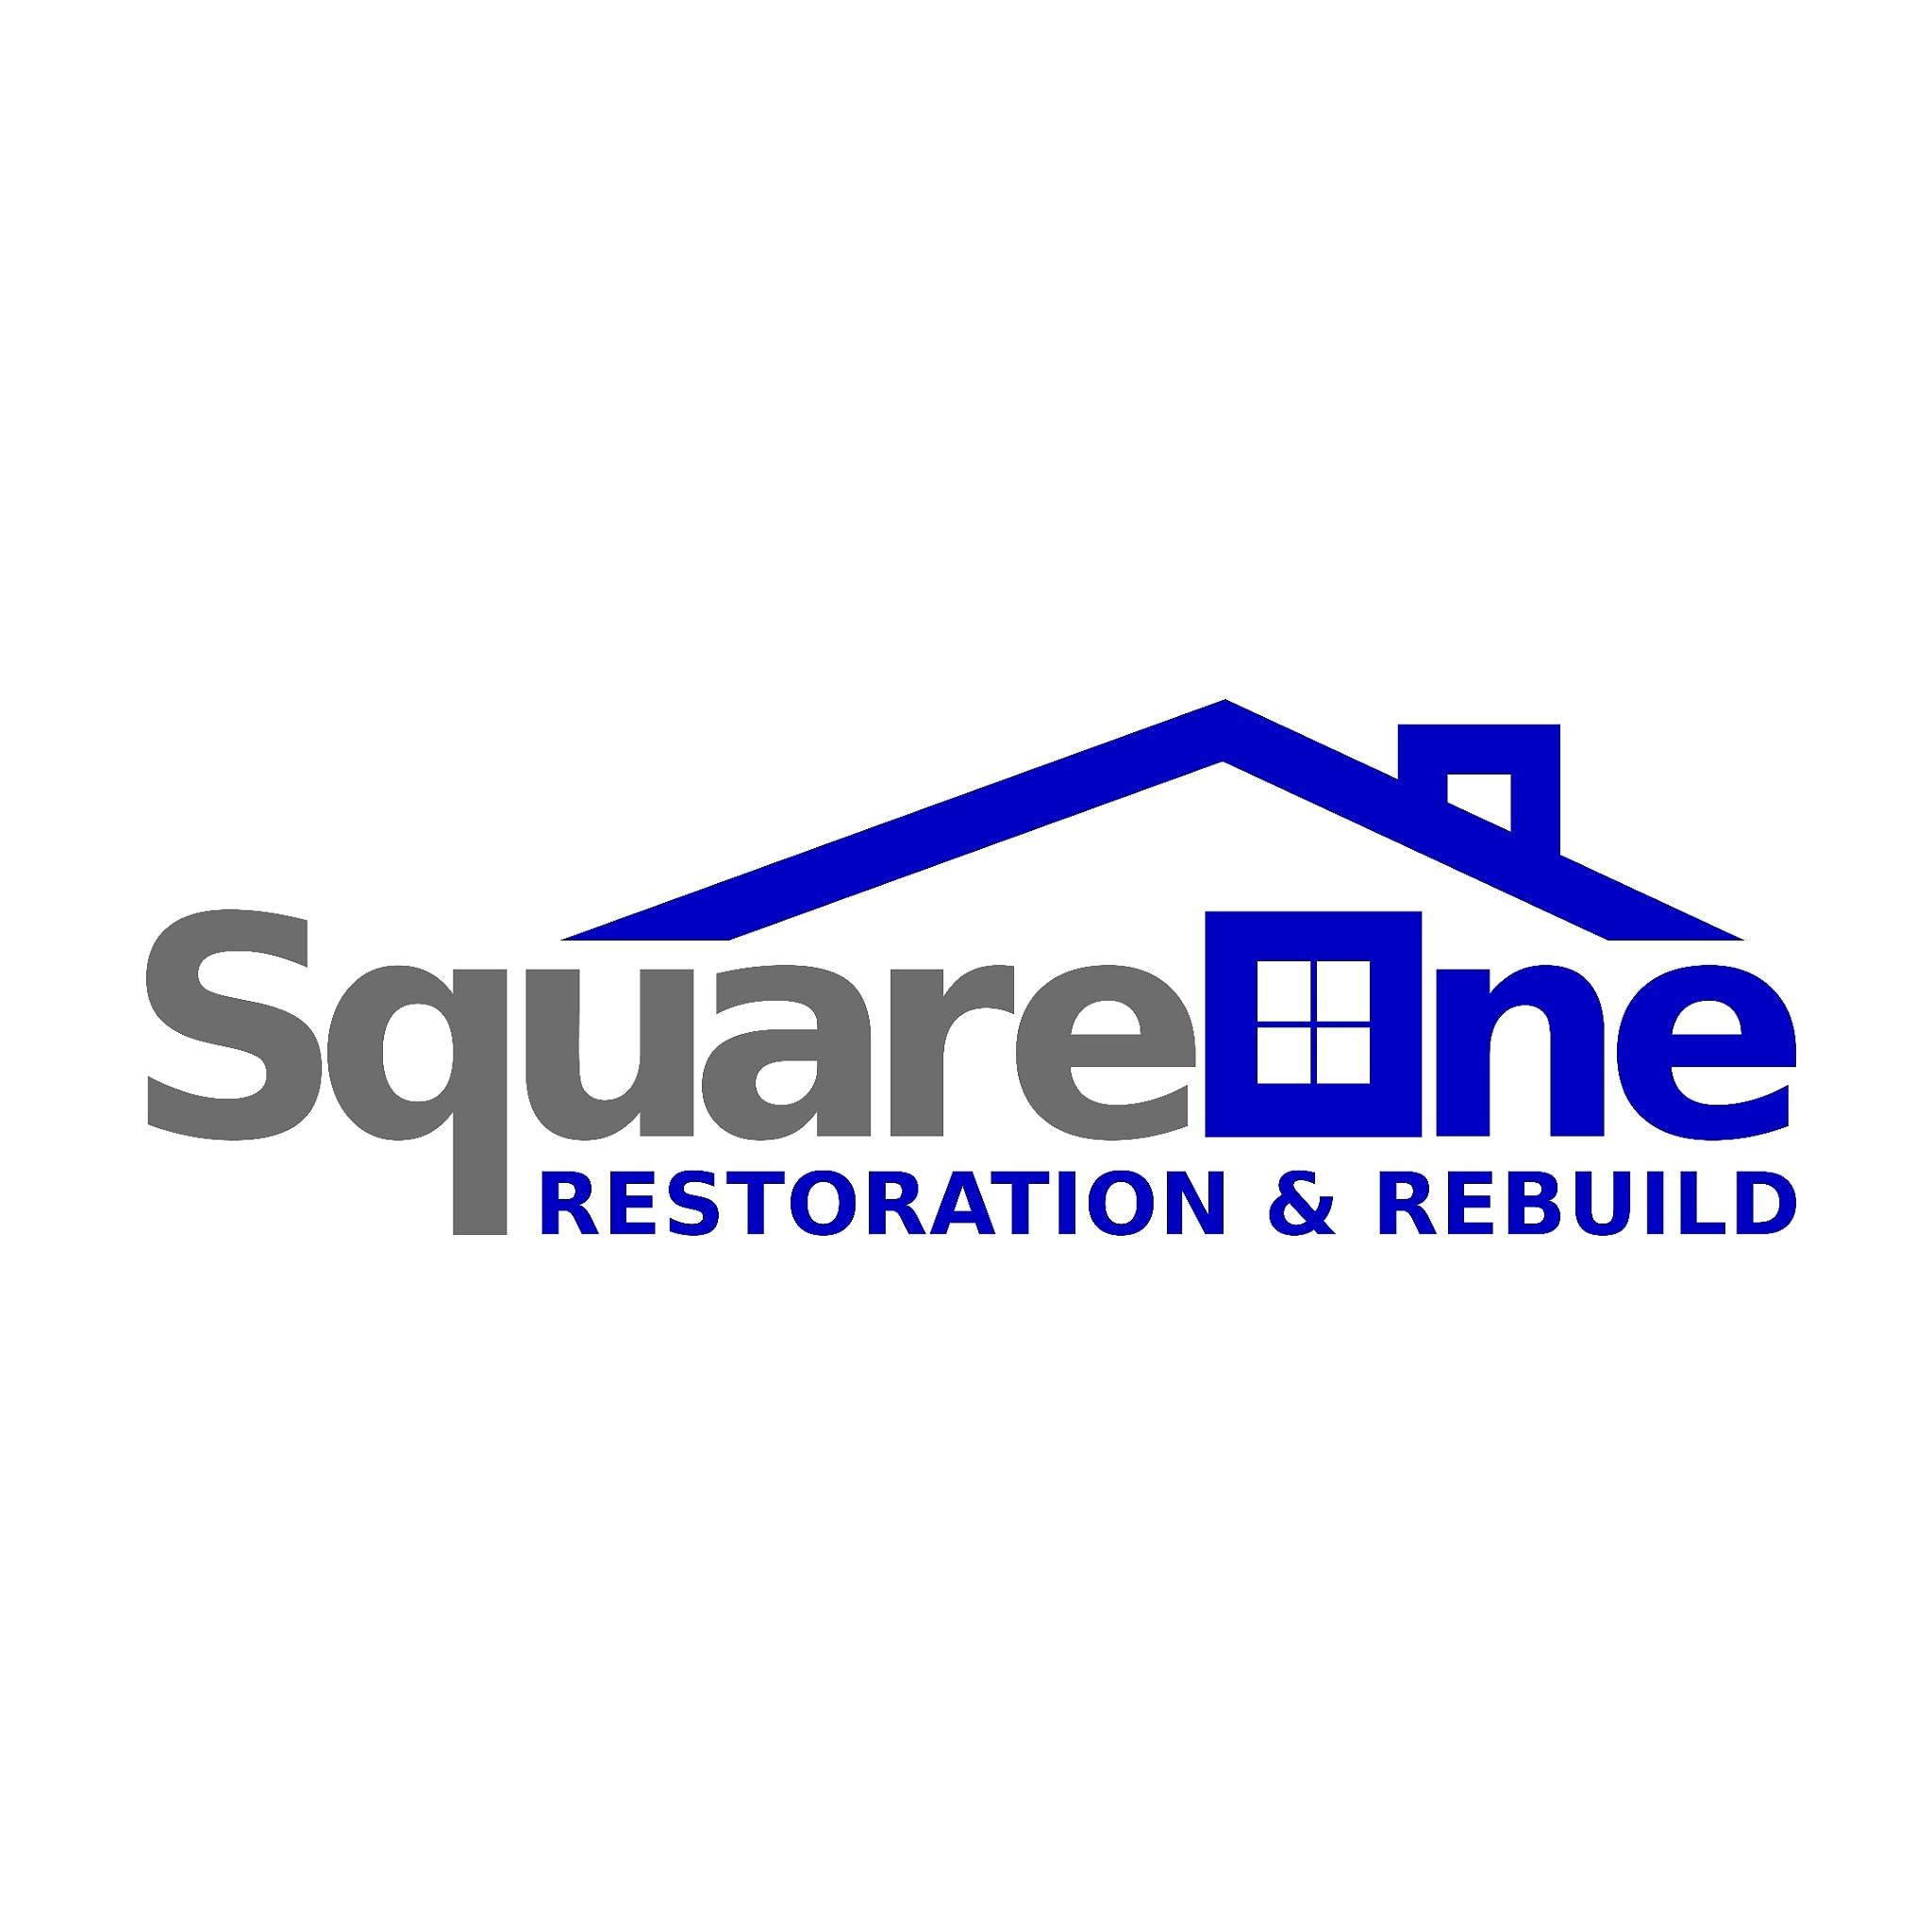 Square One Restoration, LLC